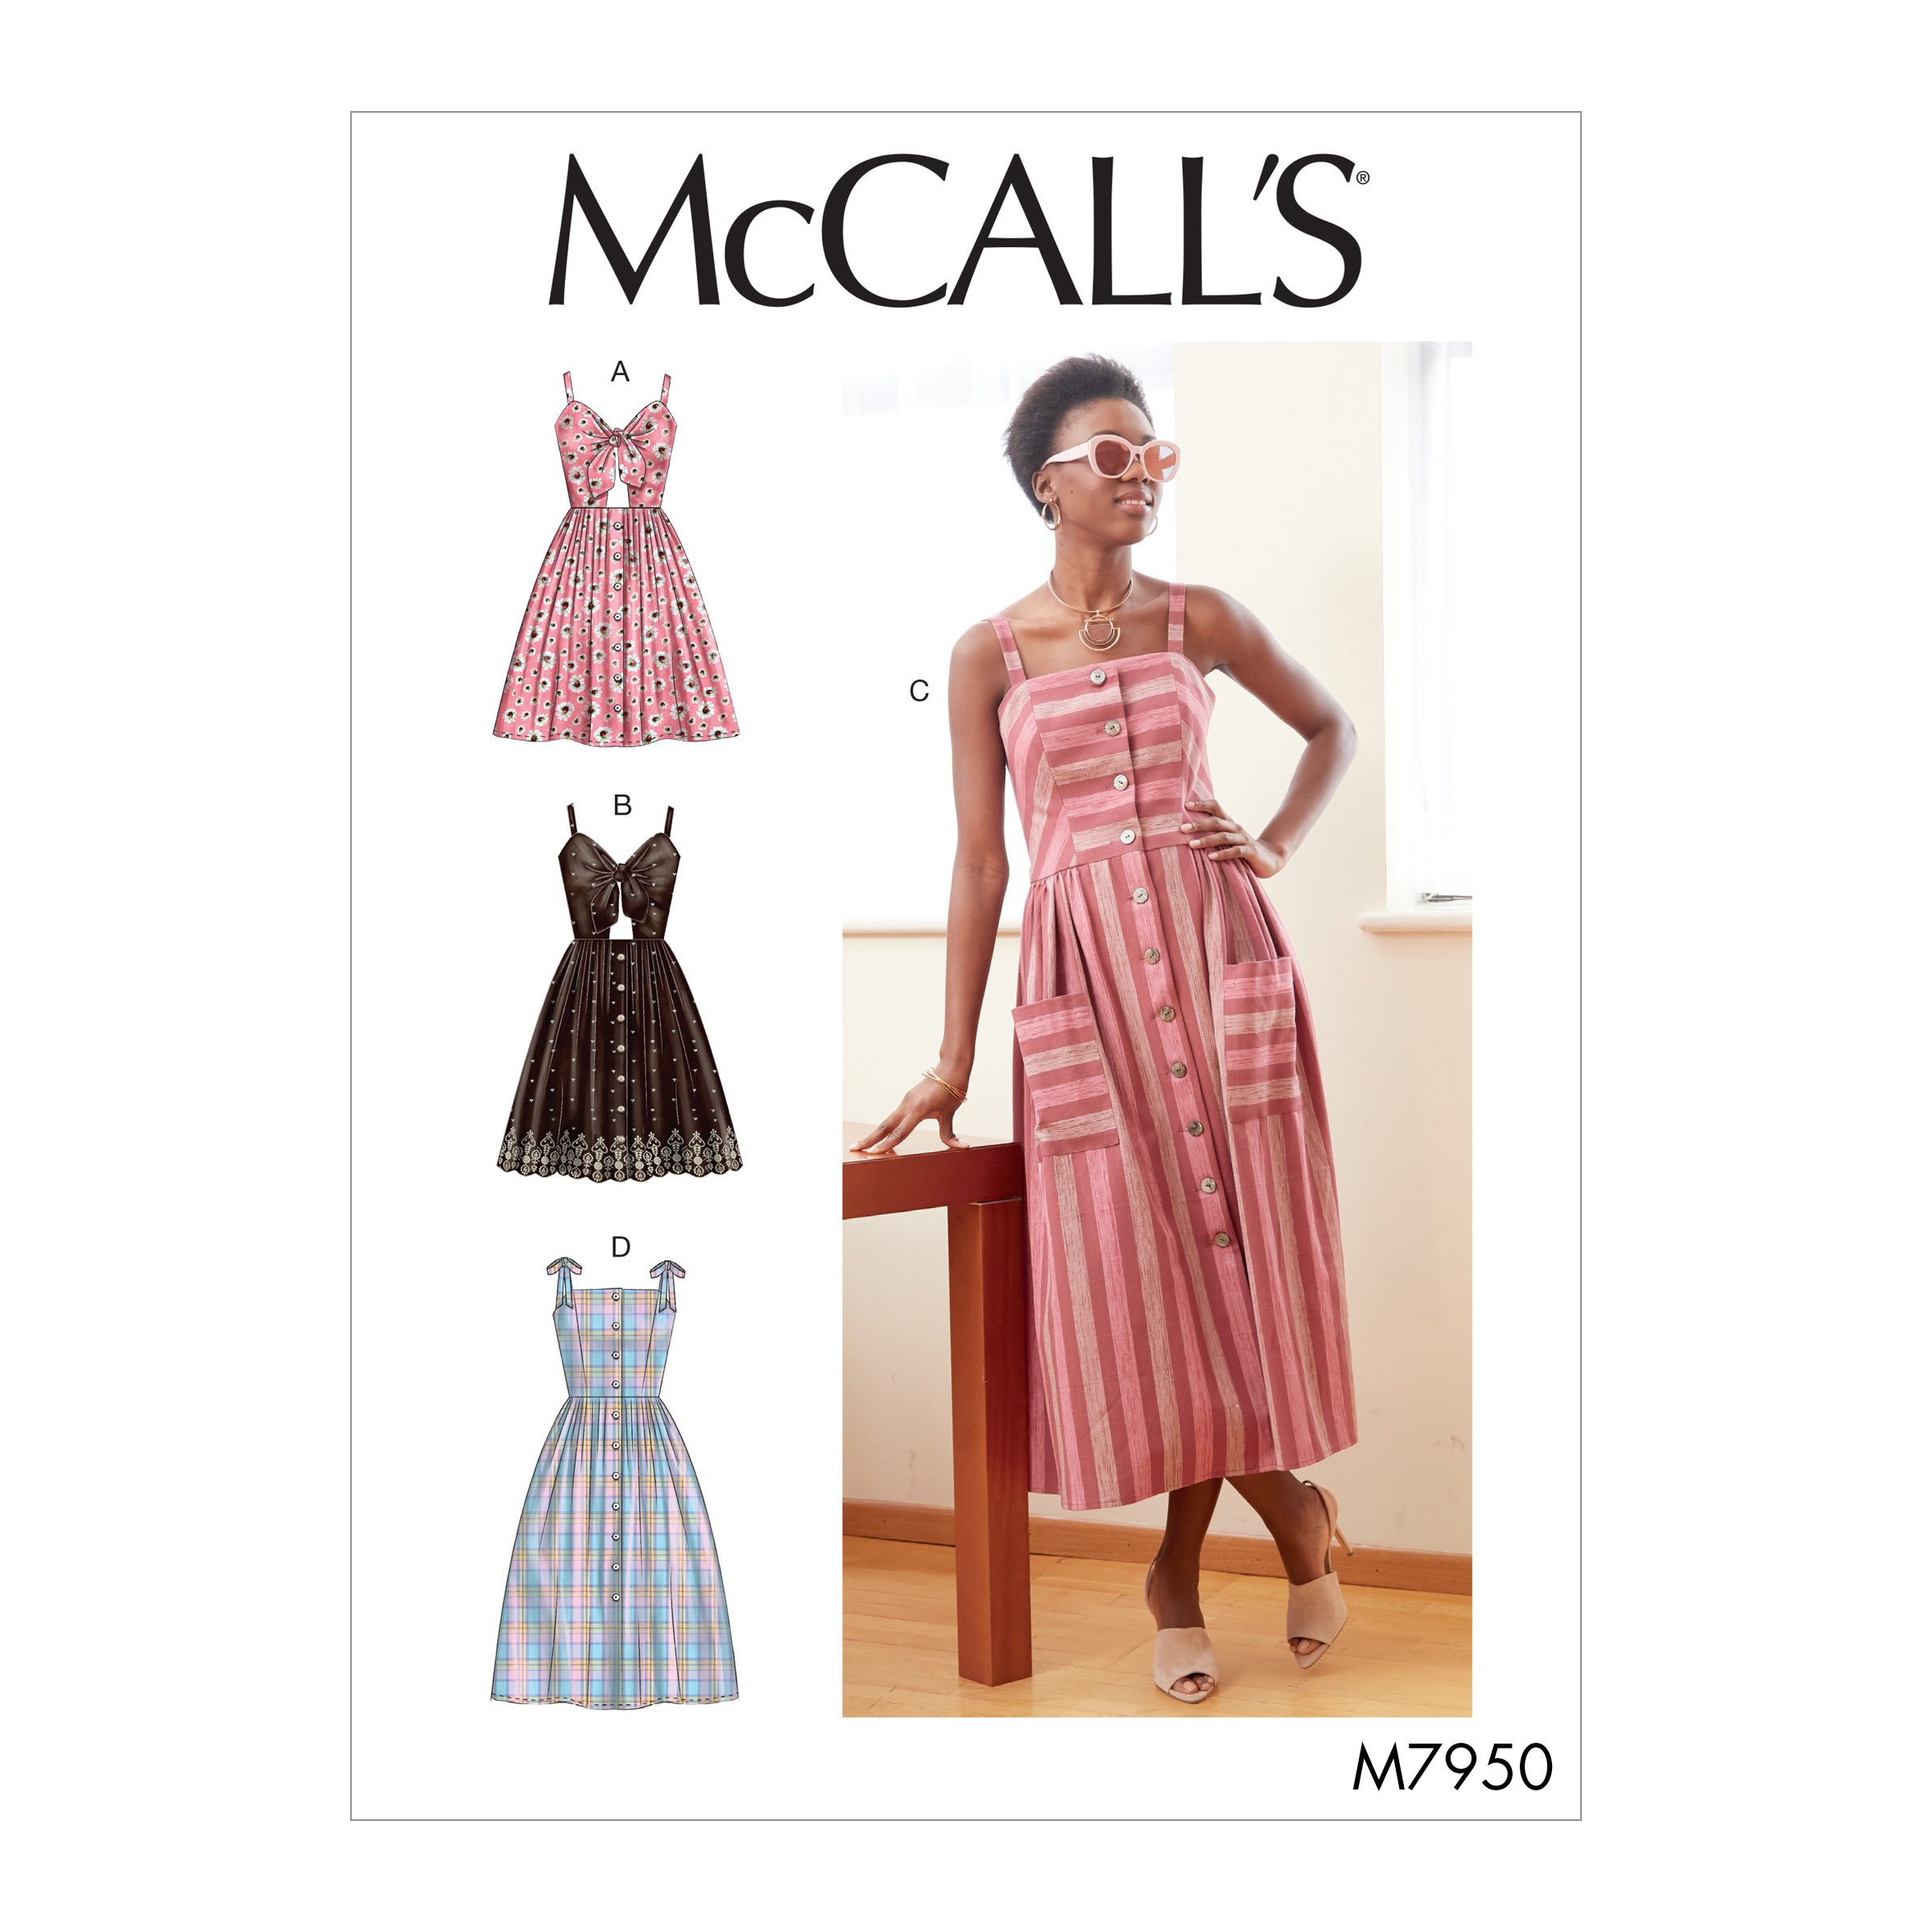 MCCALL'S MISSES' DRESSES 7950 Size: 6-8-10-12-14 A5